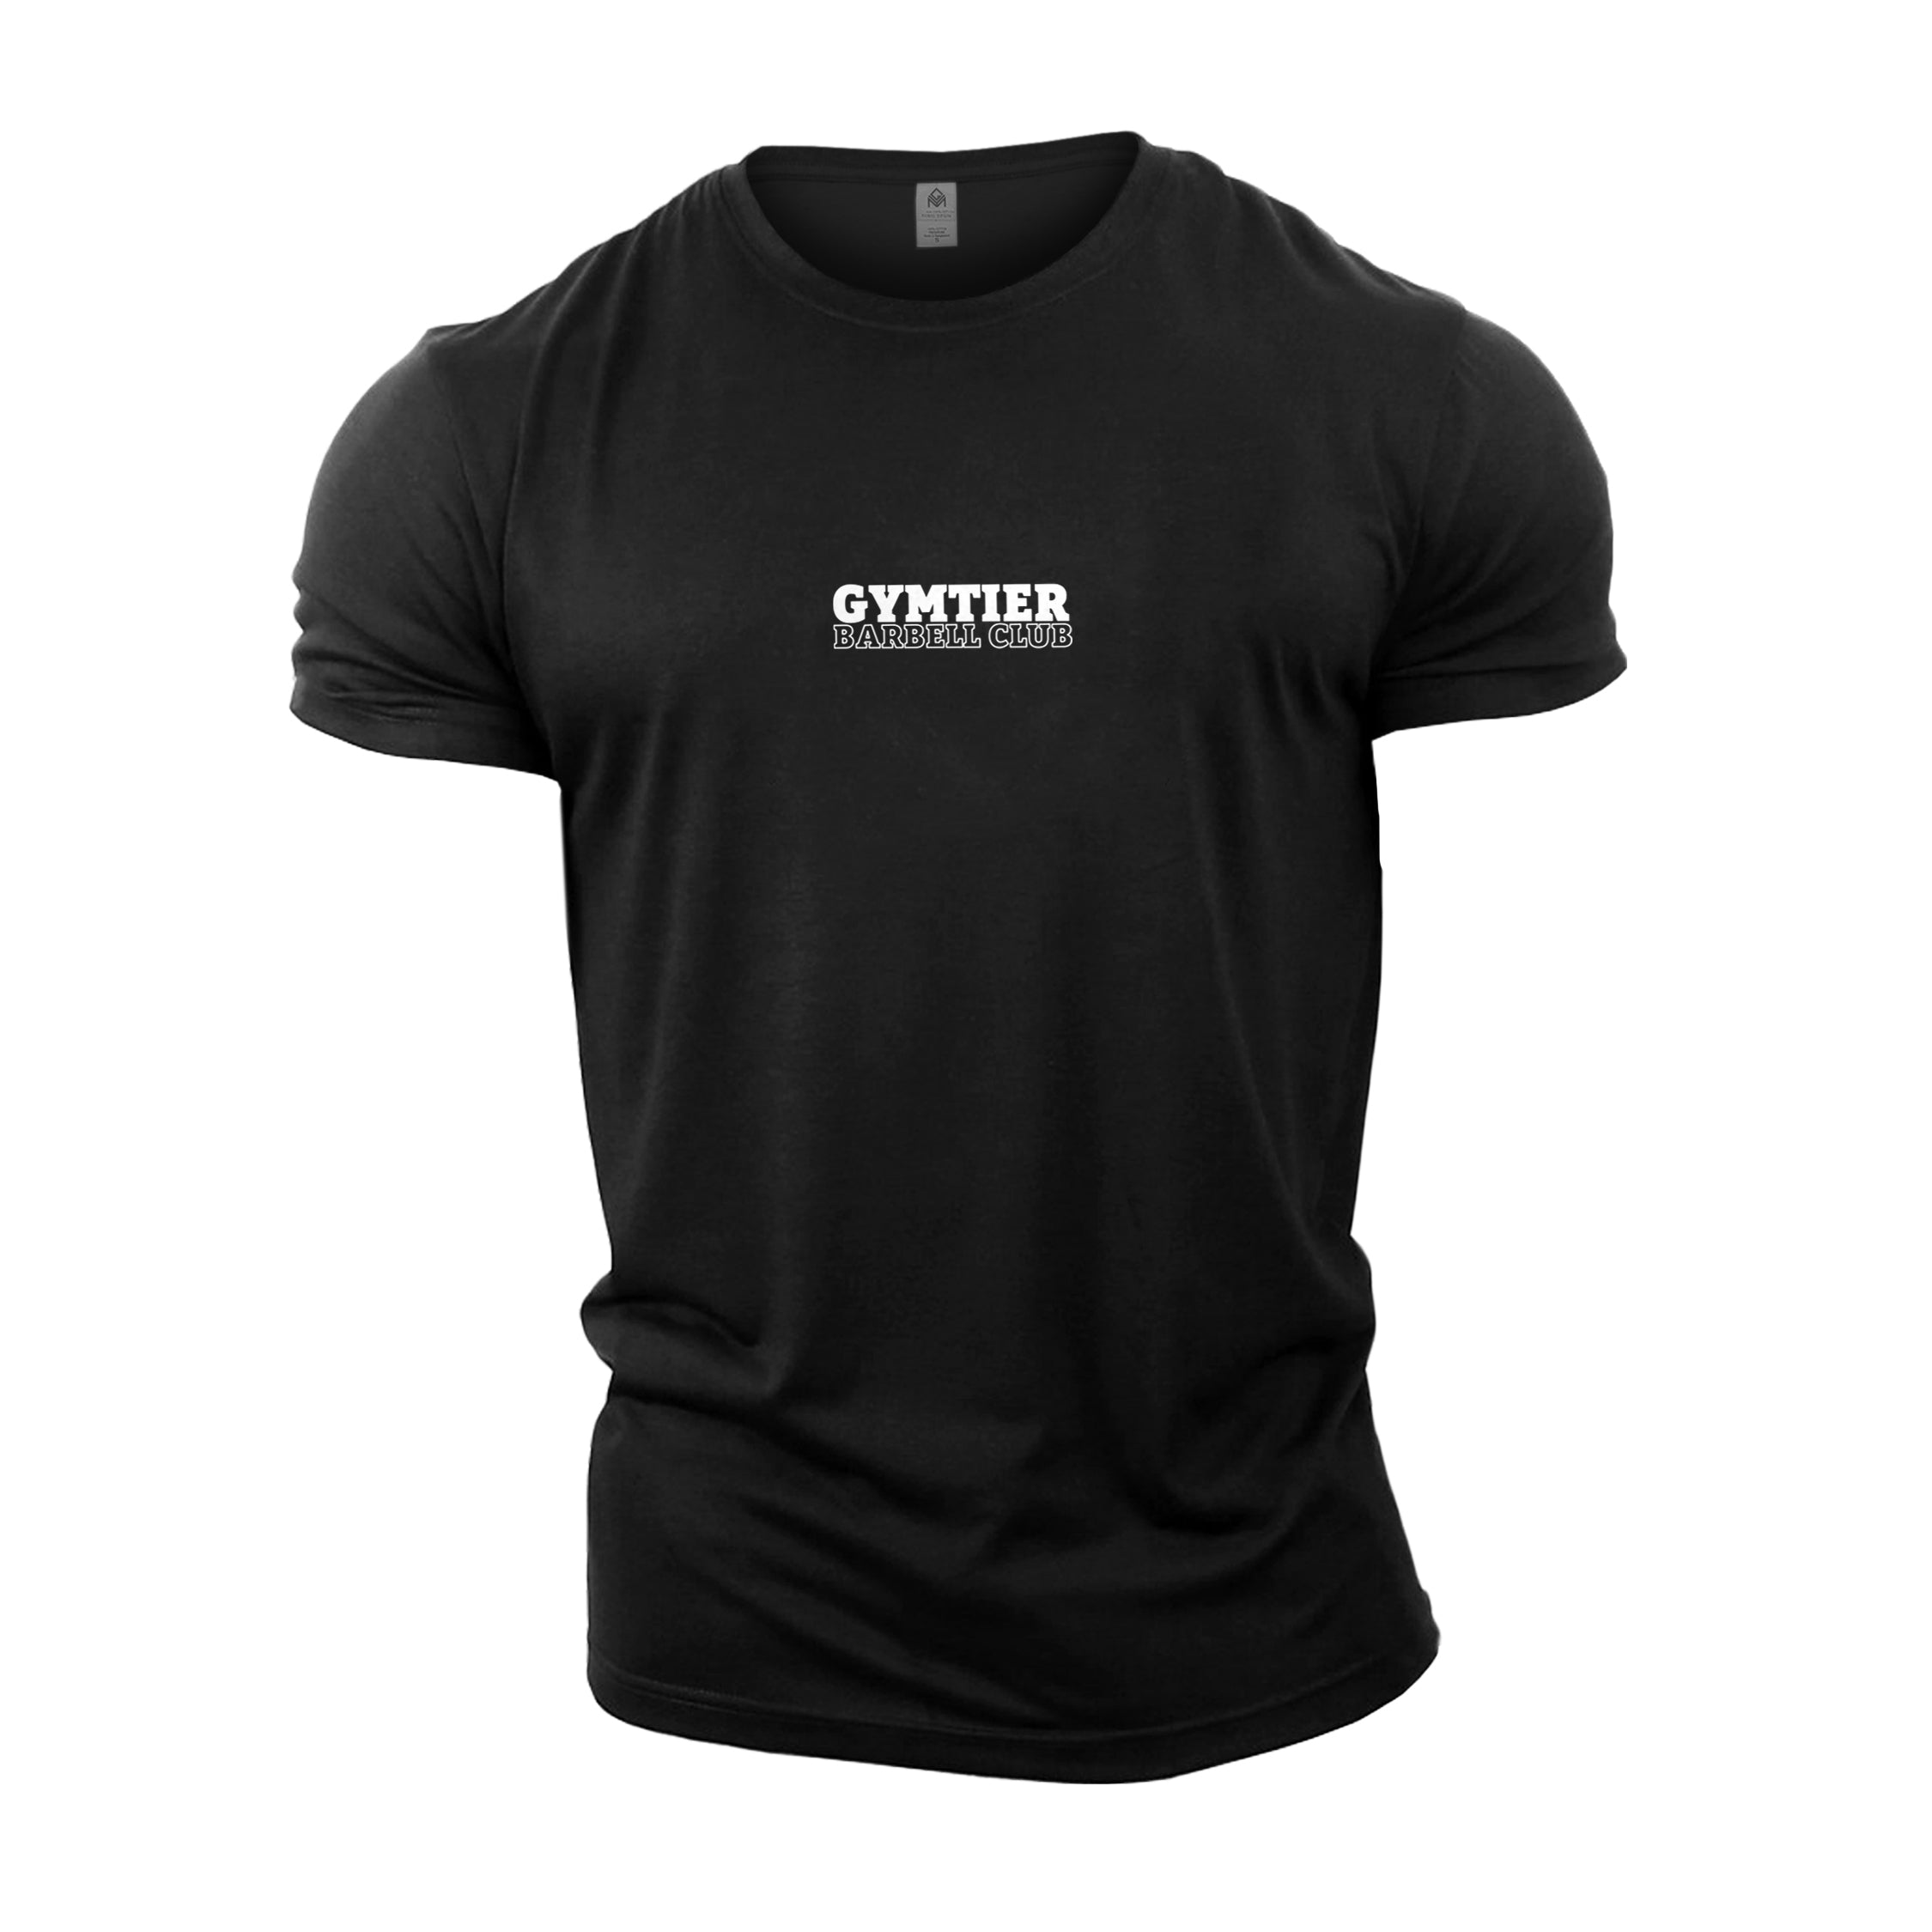 Gymtier Barbell Club - Raise The Bar - Gym T-Shirt